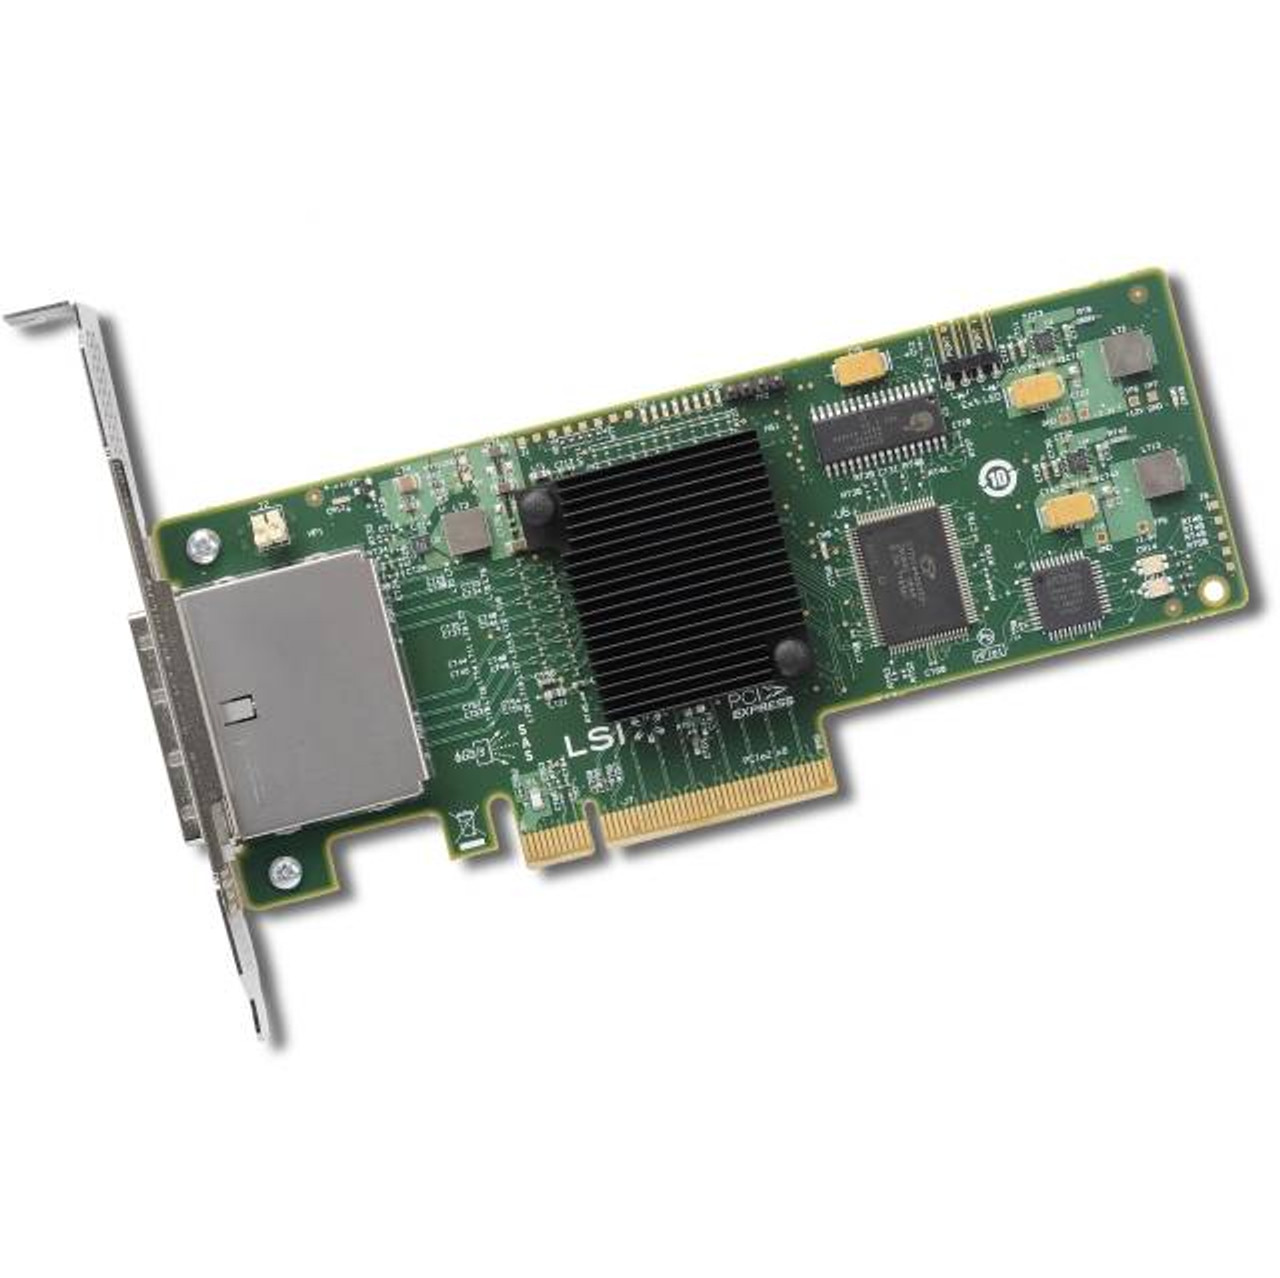 Broadcom LSI 9200-8E 8-Port 6Gb/s SAS/SATA PCI-Express x8 External Host Bus Adapter